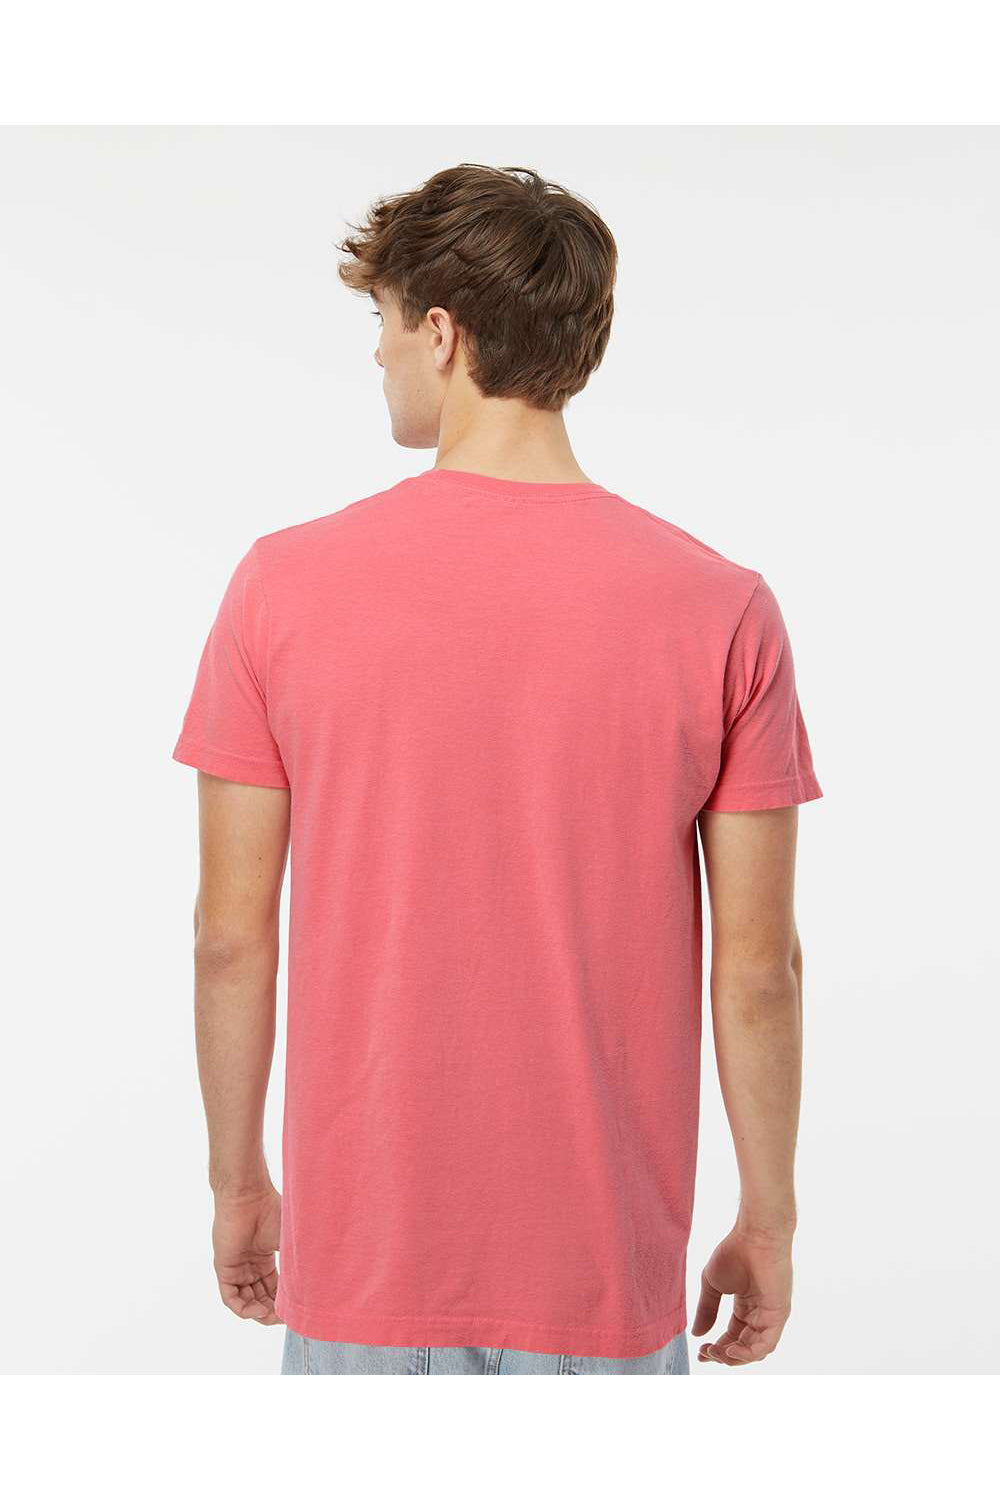 M&O 6500M Mens Vintage Garment Dyed Short Sleeve Crewneck T-Shirt Watermelon Red Model Back